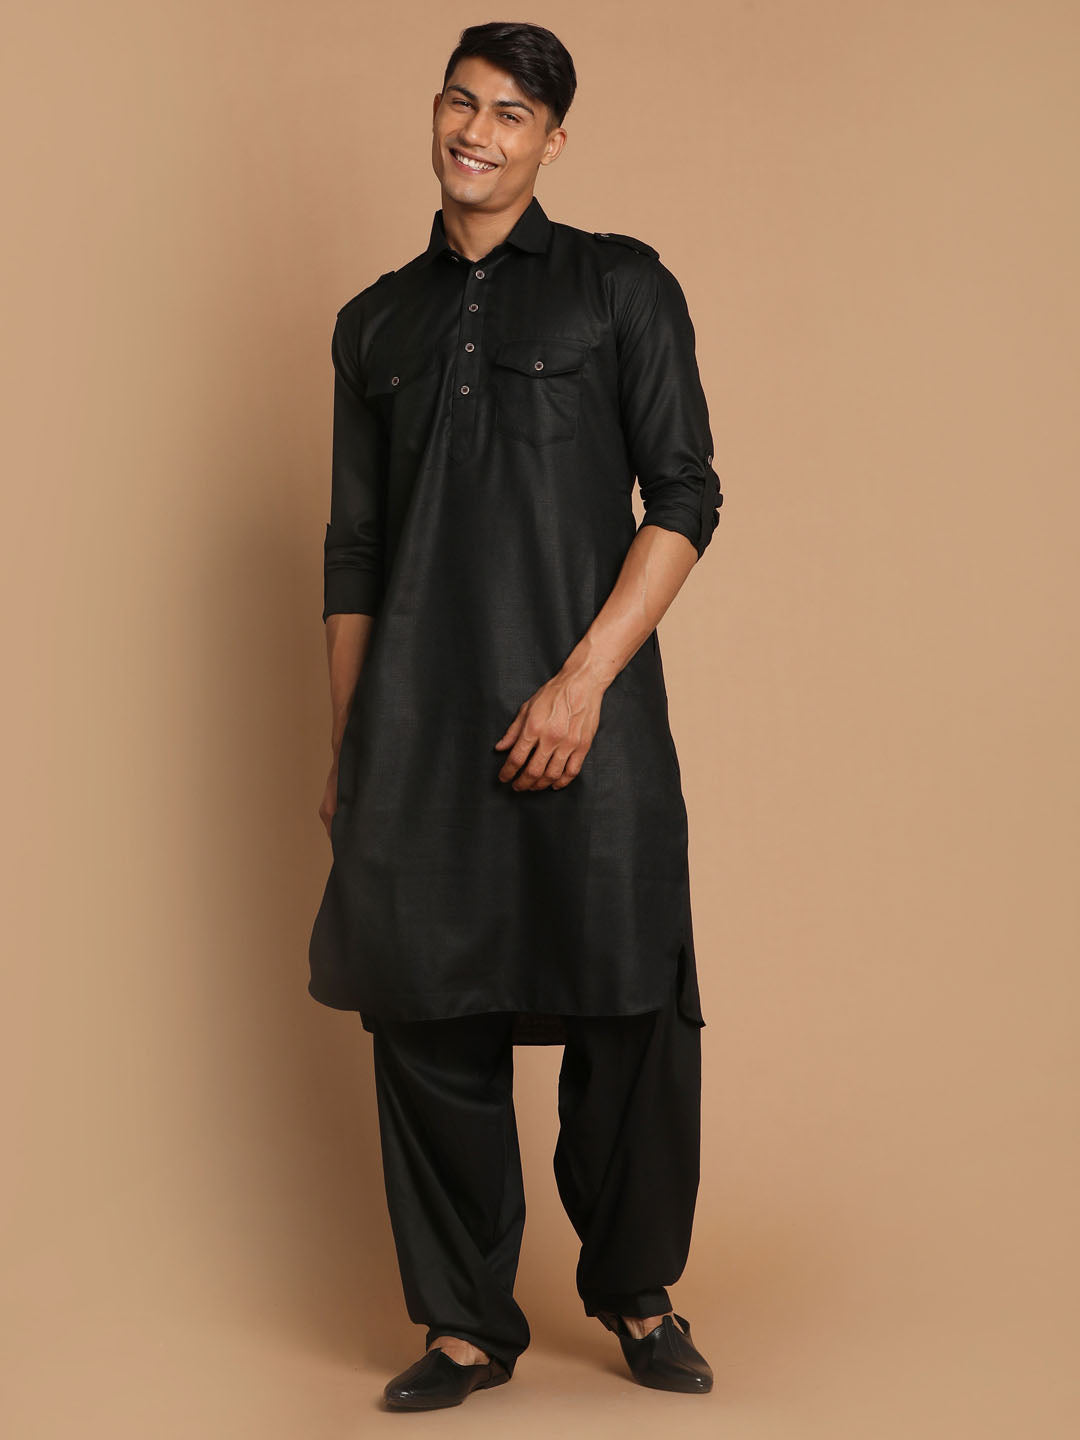 Men Kurta Suit: Buy Latest Kurta Pajama for Men Online | G3Fashion |  Fashion suits for men, Mens kurta designs, Pathani for men